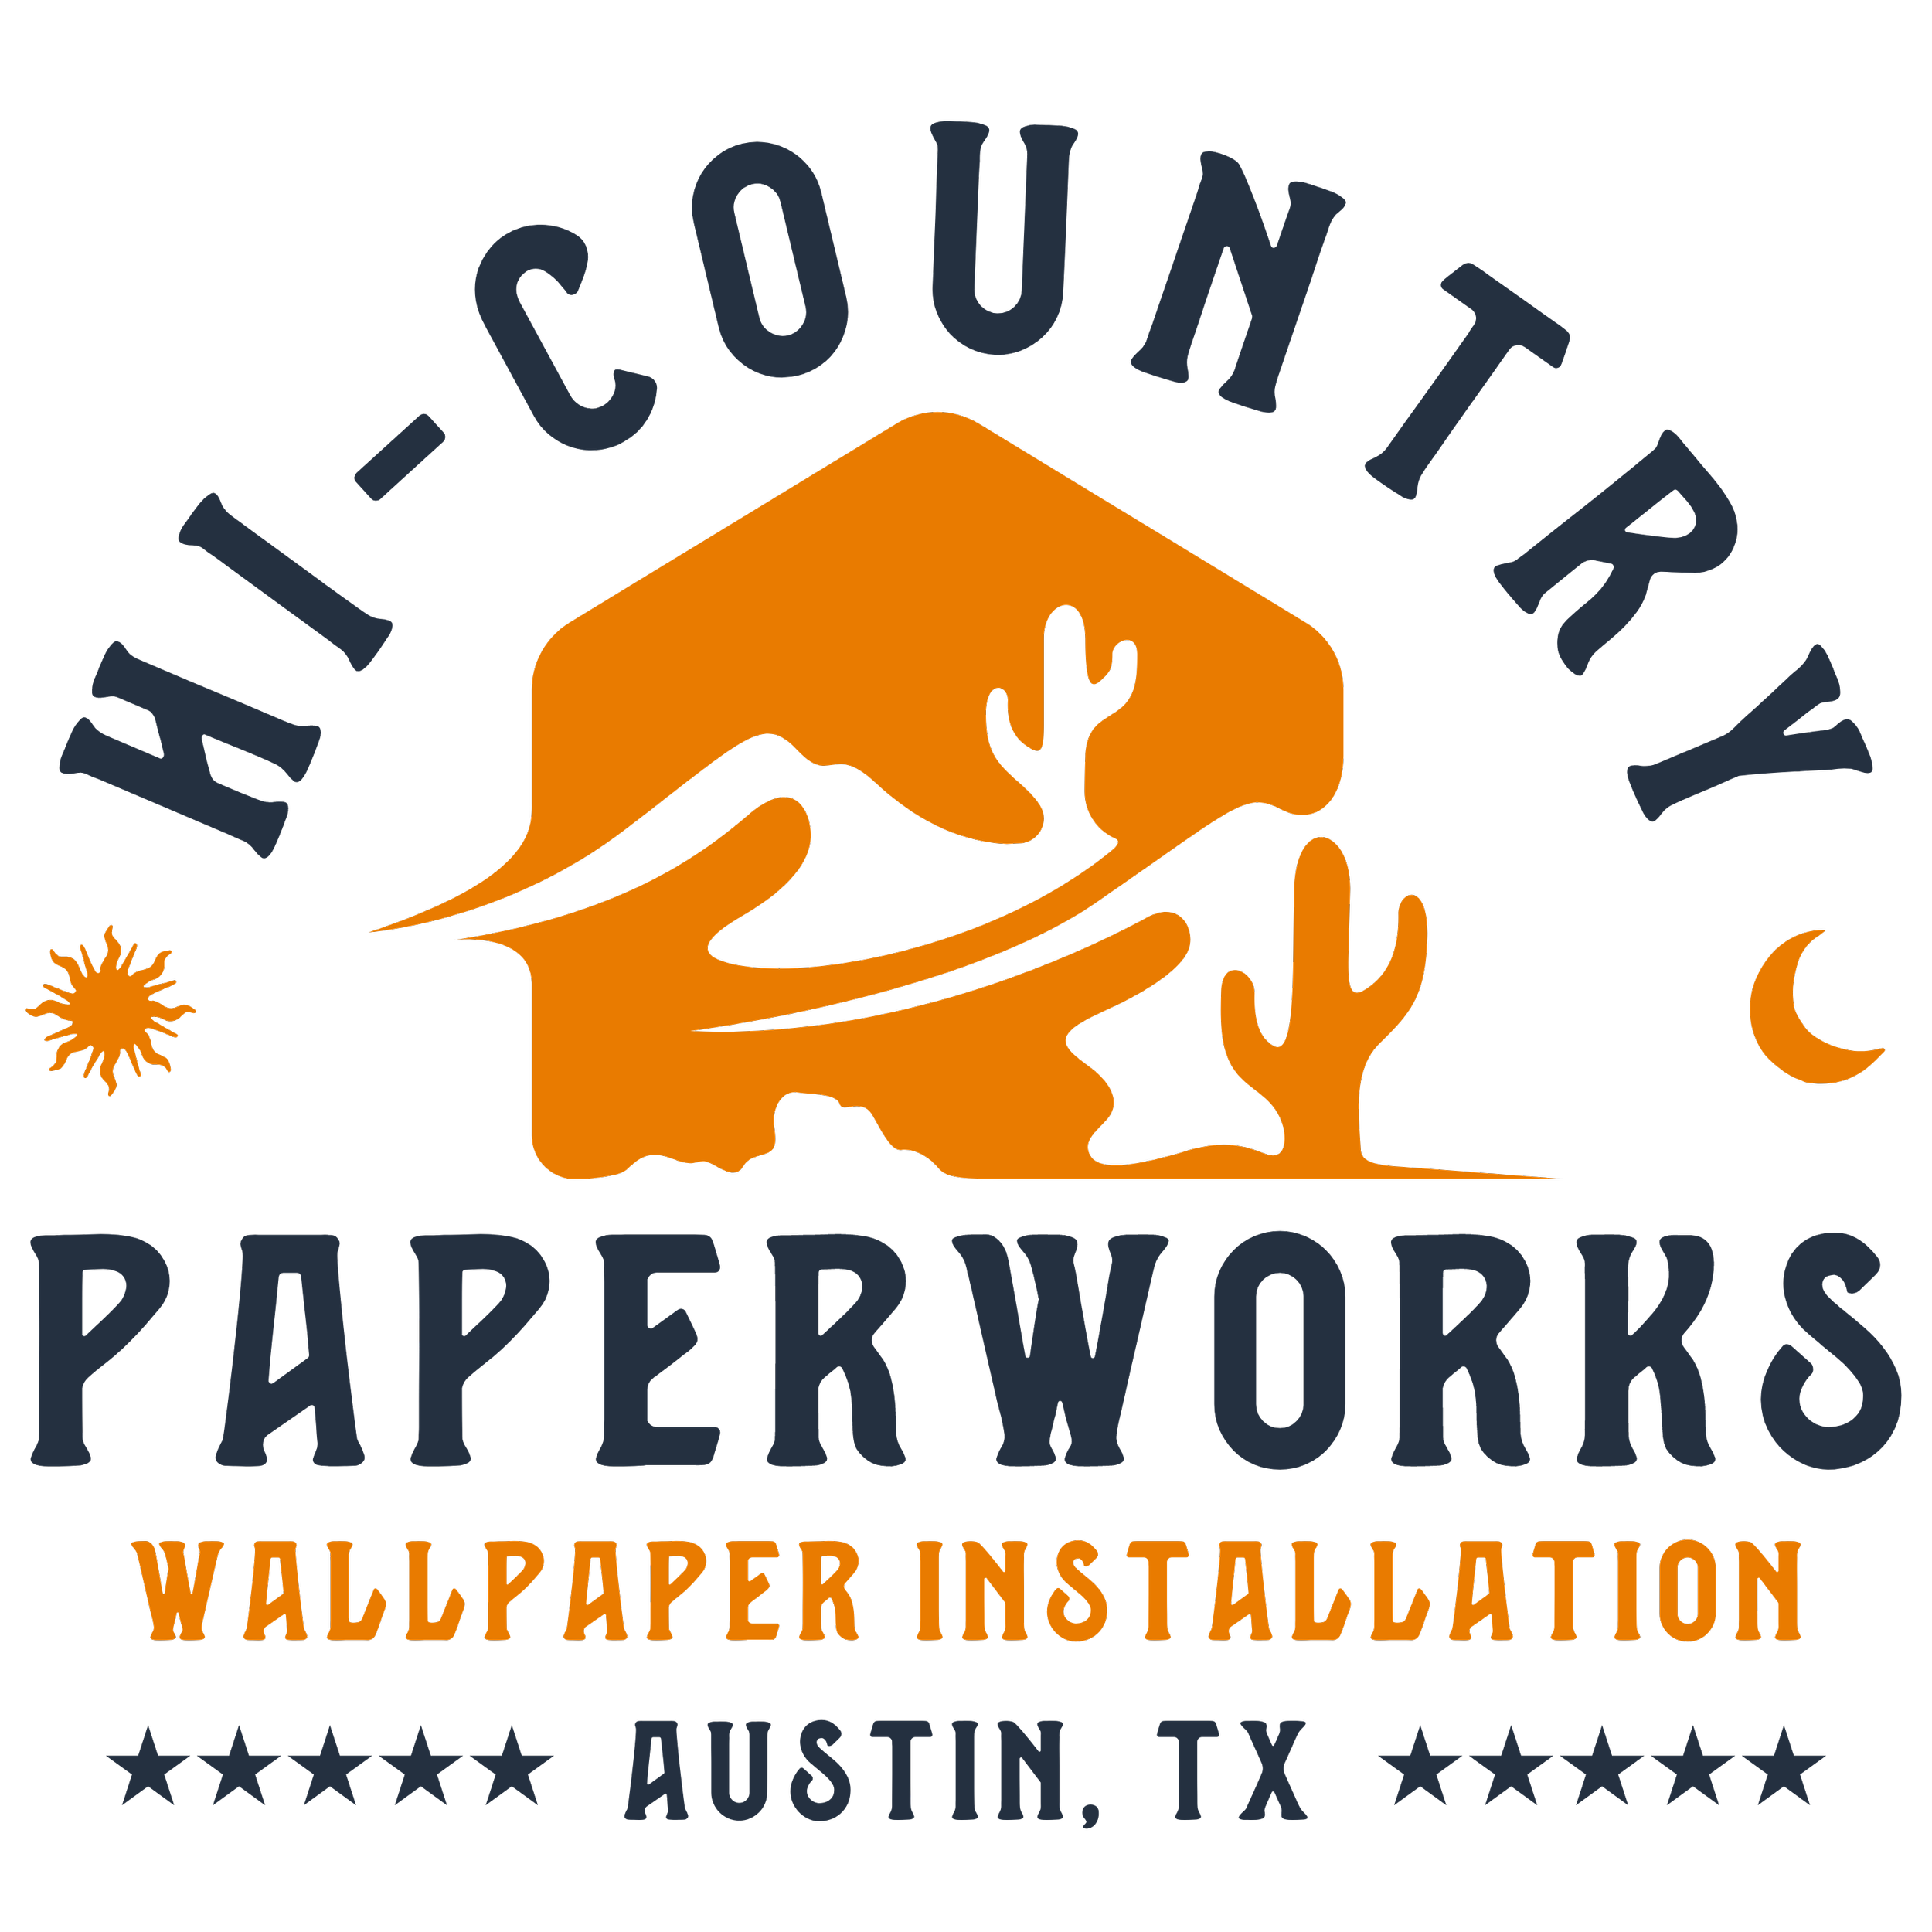 Wallpaper installation Austin TX  Interior Construction Contractor